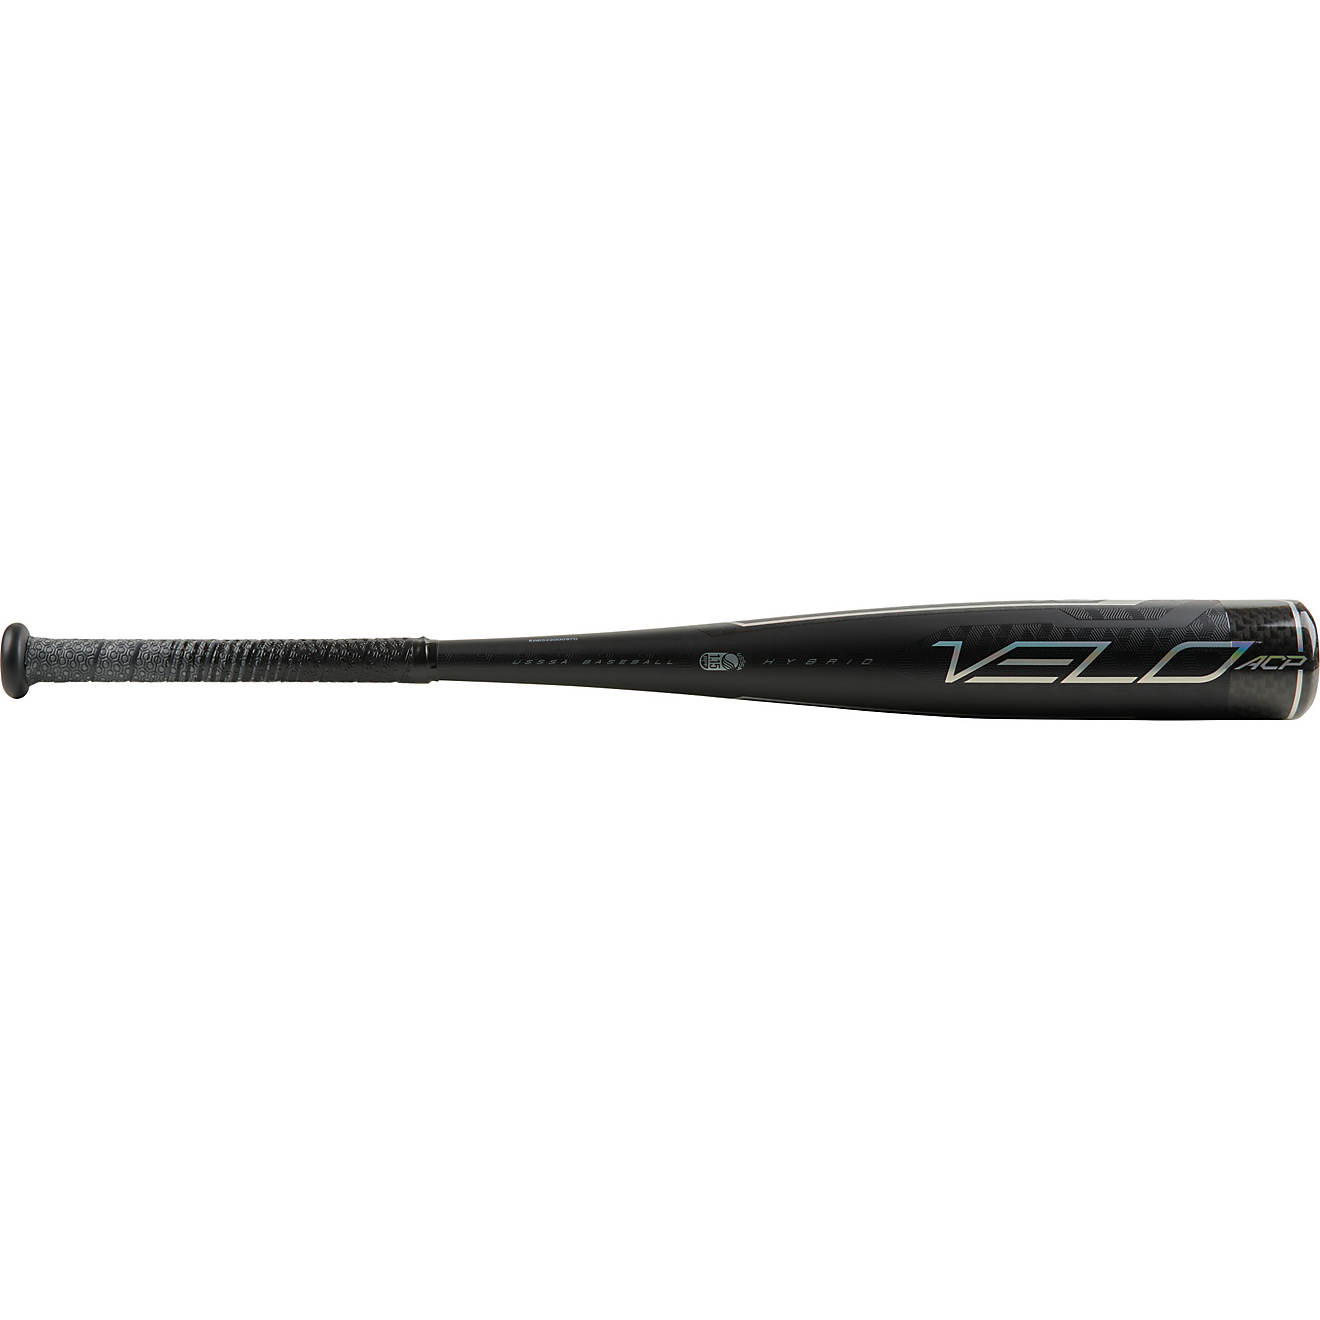 Details about   2020 Rawlings VELO ACP Hybrid USSSA Baseball Bat -10 UTZV10 